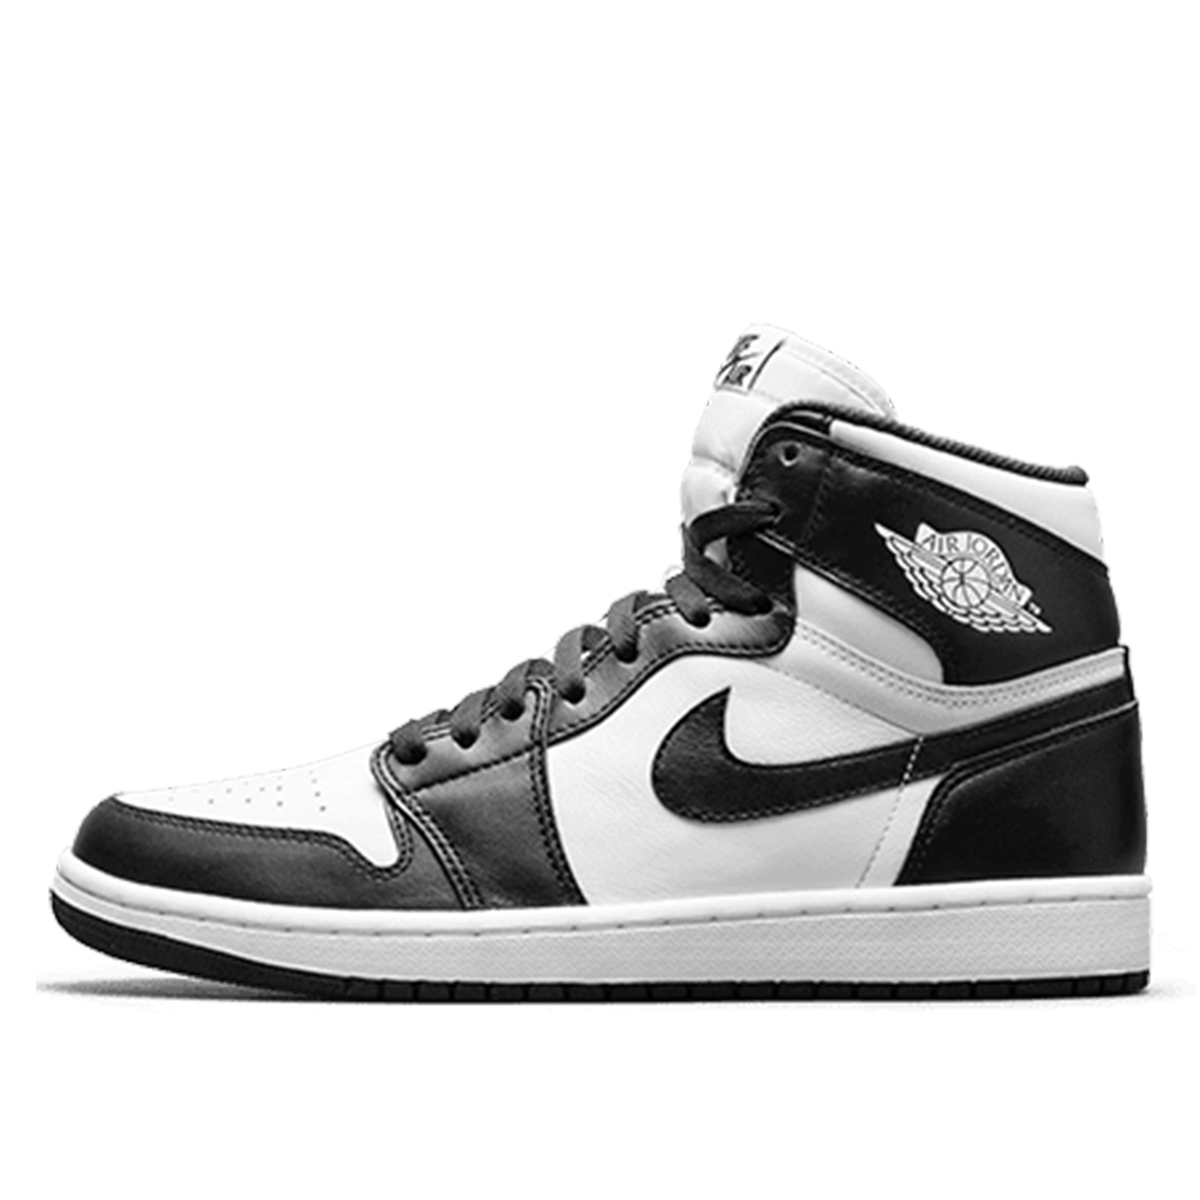 Air Jordan Nike AJ I 1 Retro Black White (2014) | 555088-010 - KLEKT